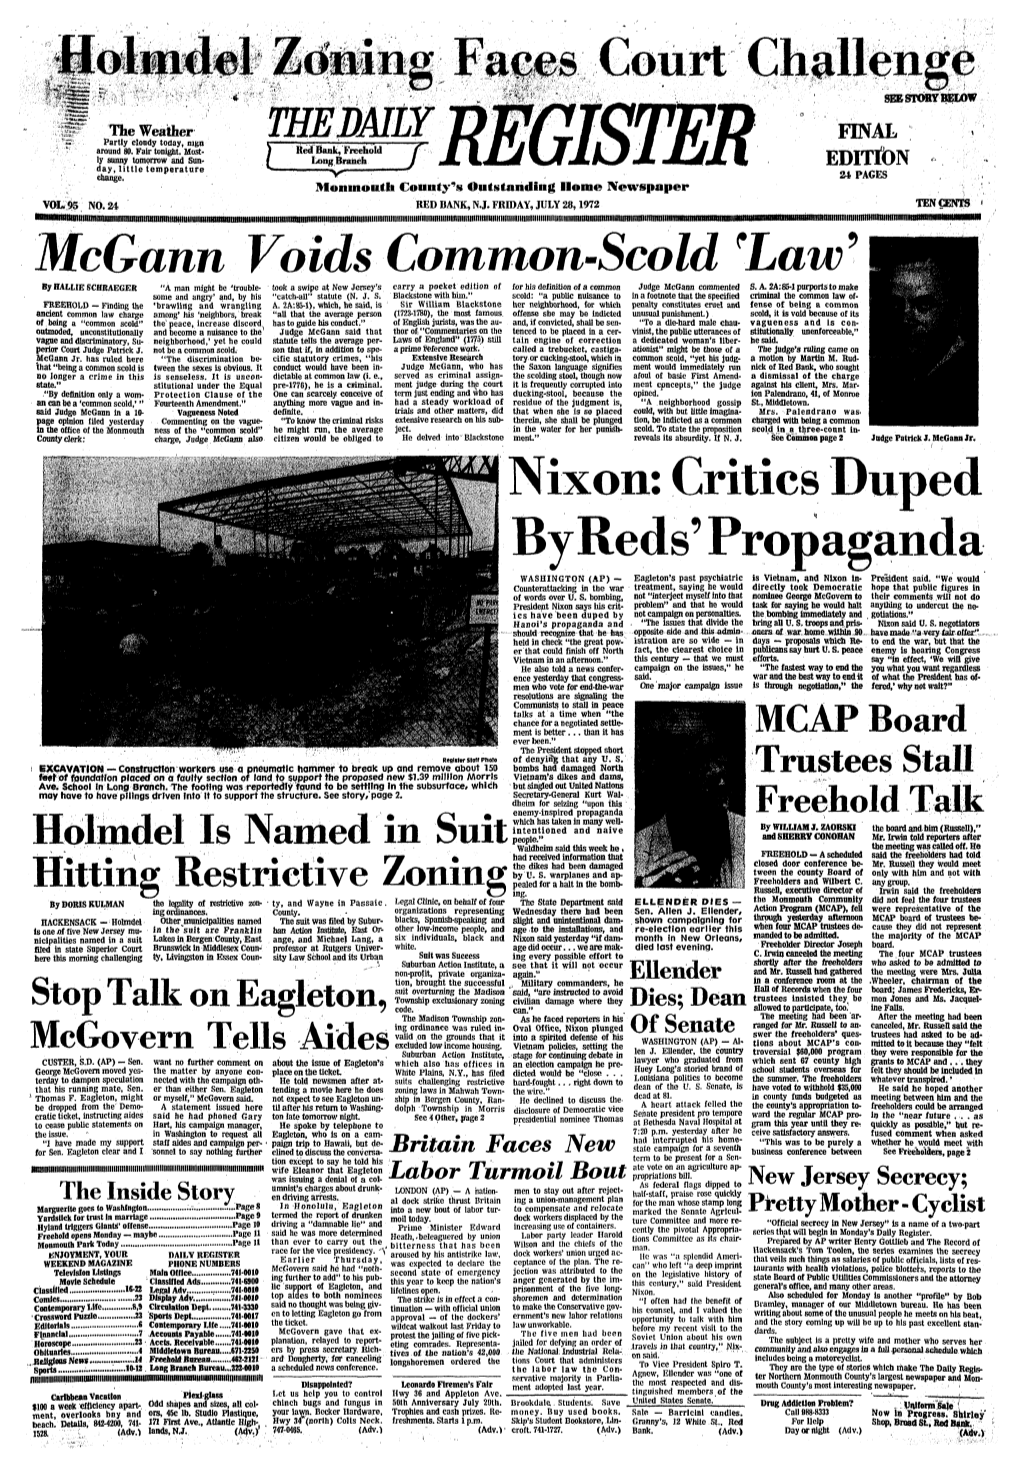 Critics Duped by Reds' Propaganda WASHINGTON (AP) — Eagleton's Past Psychiatric Is Vietnam, and Nixon In- President Said